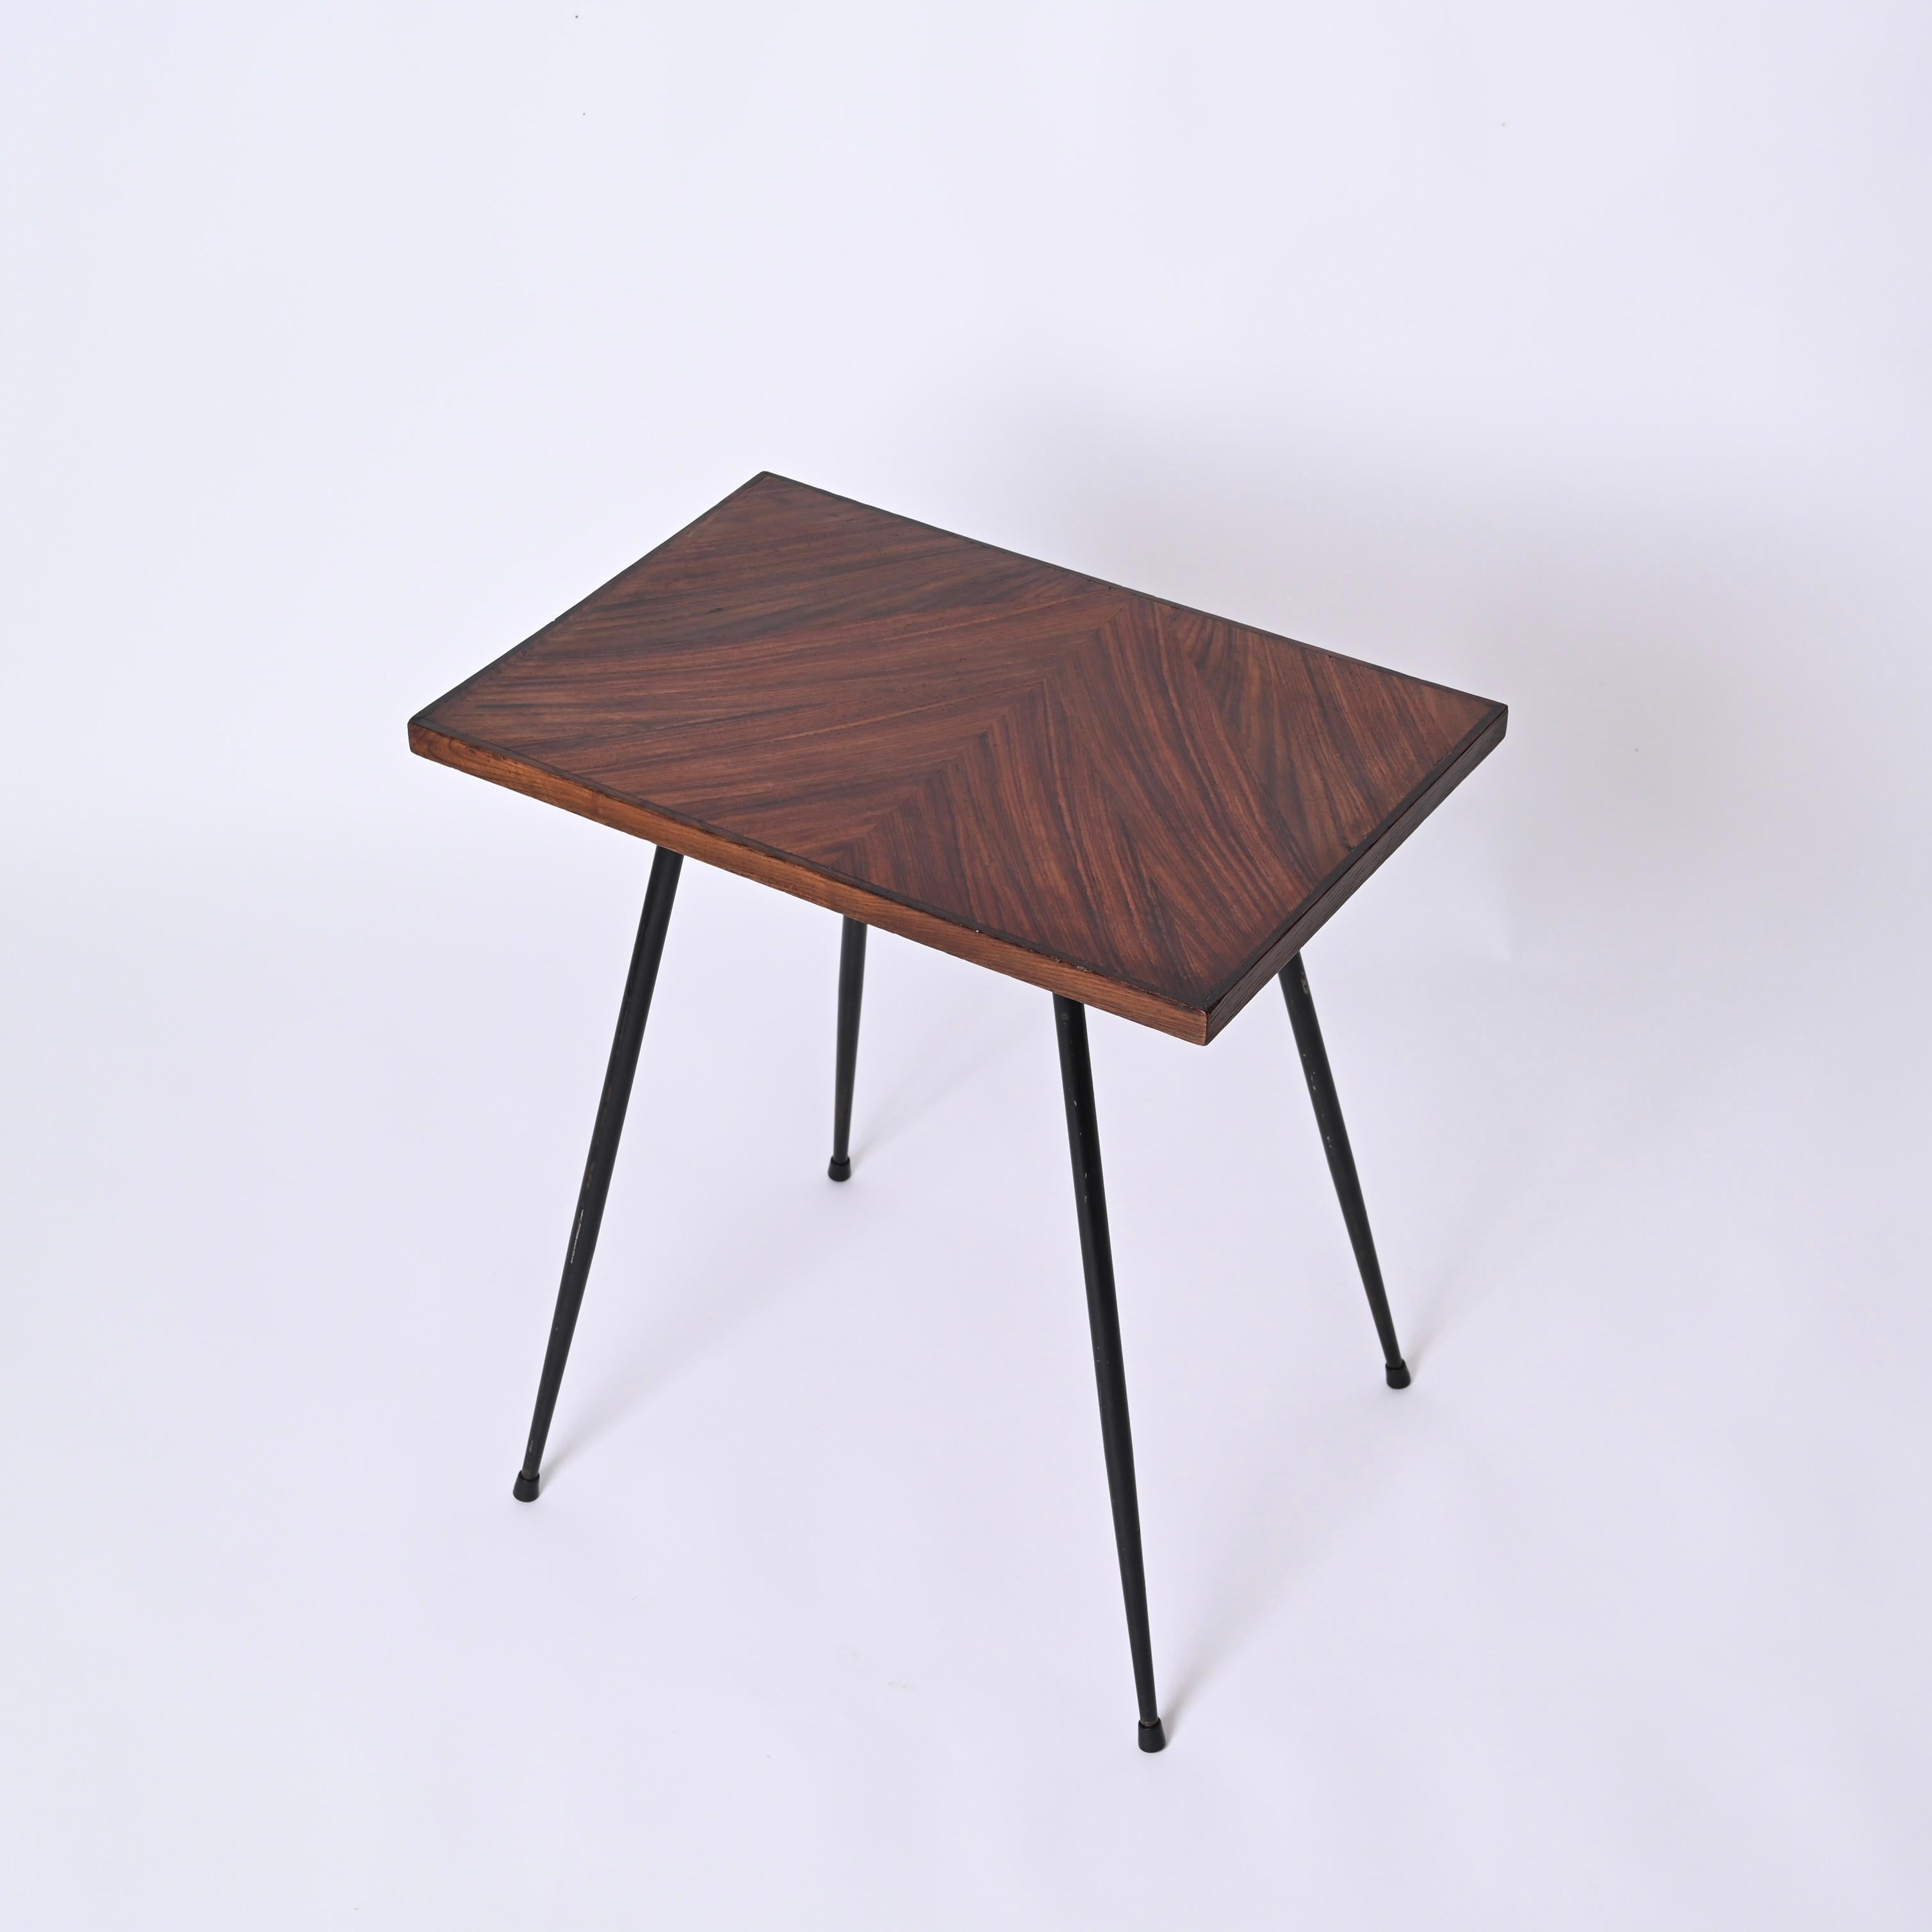 Italian Midcentury Rectangular Side Table in Teak Wood and Enameled Metal, 1950s For Sale 10